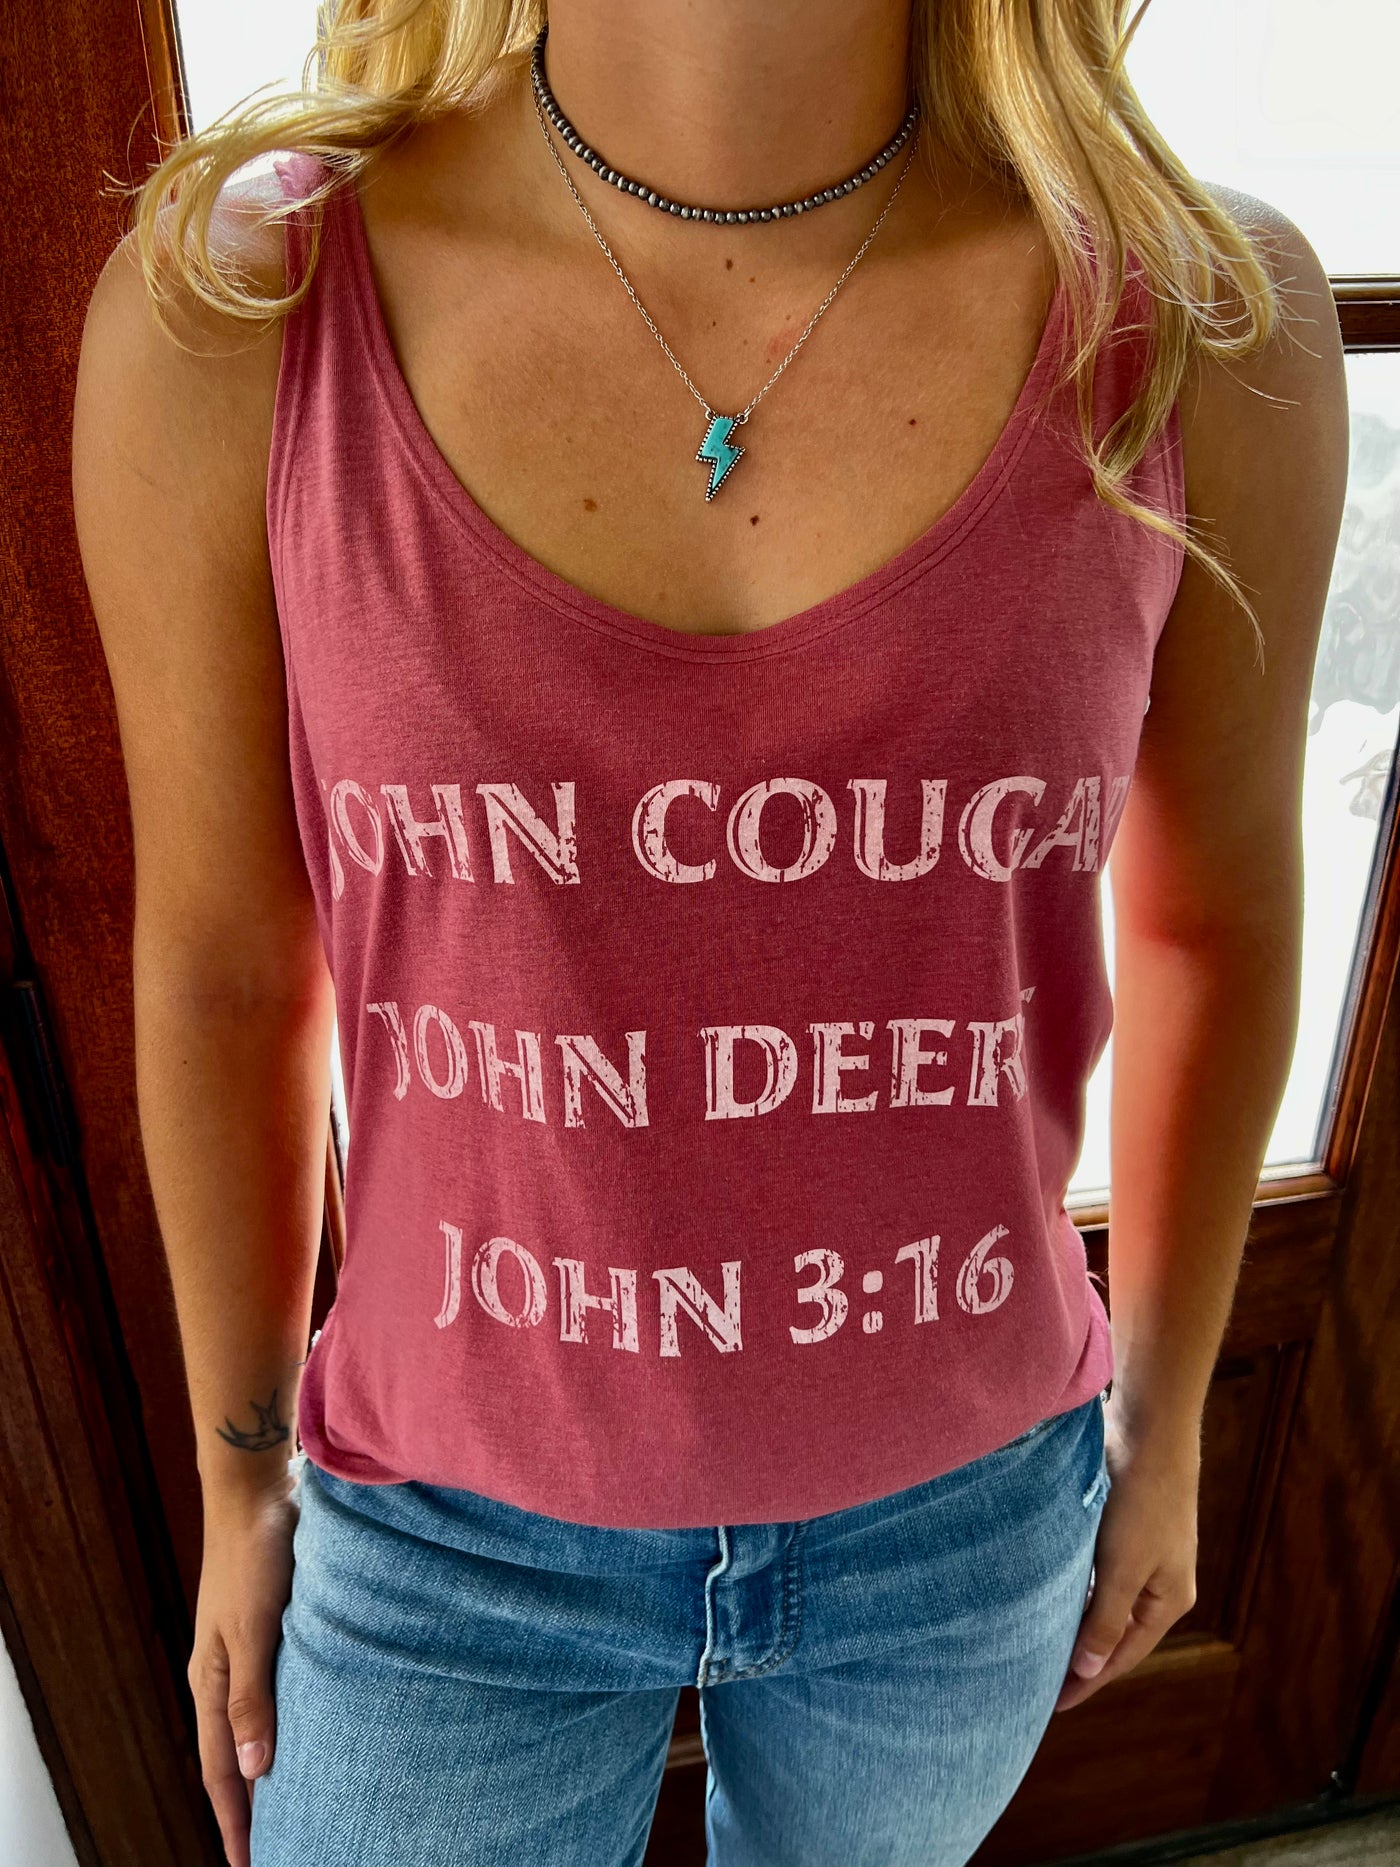 John Cougar, John Deer, John 3:16